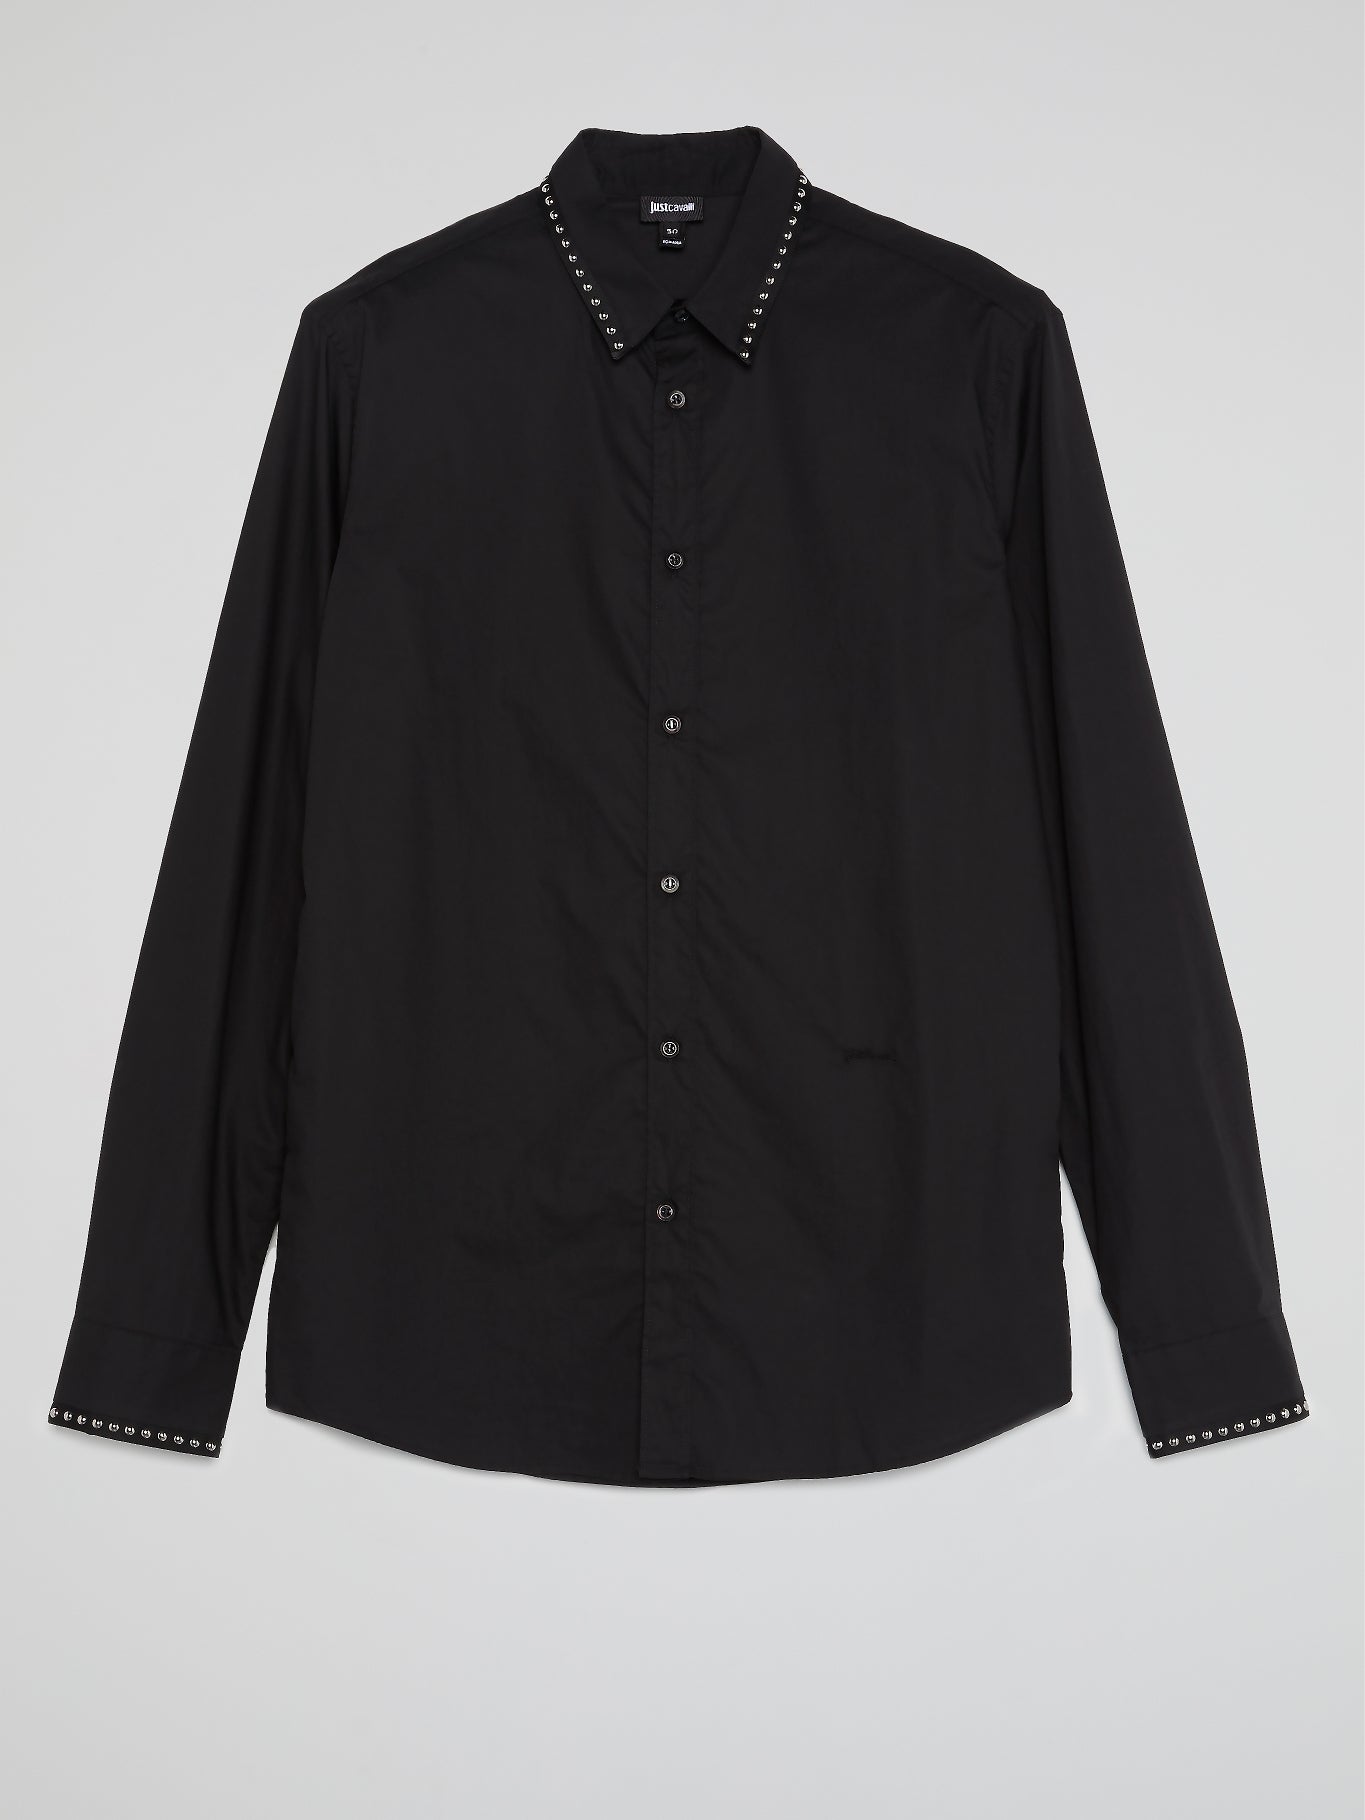 Black Studded Trim Shirt